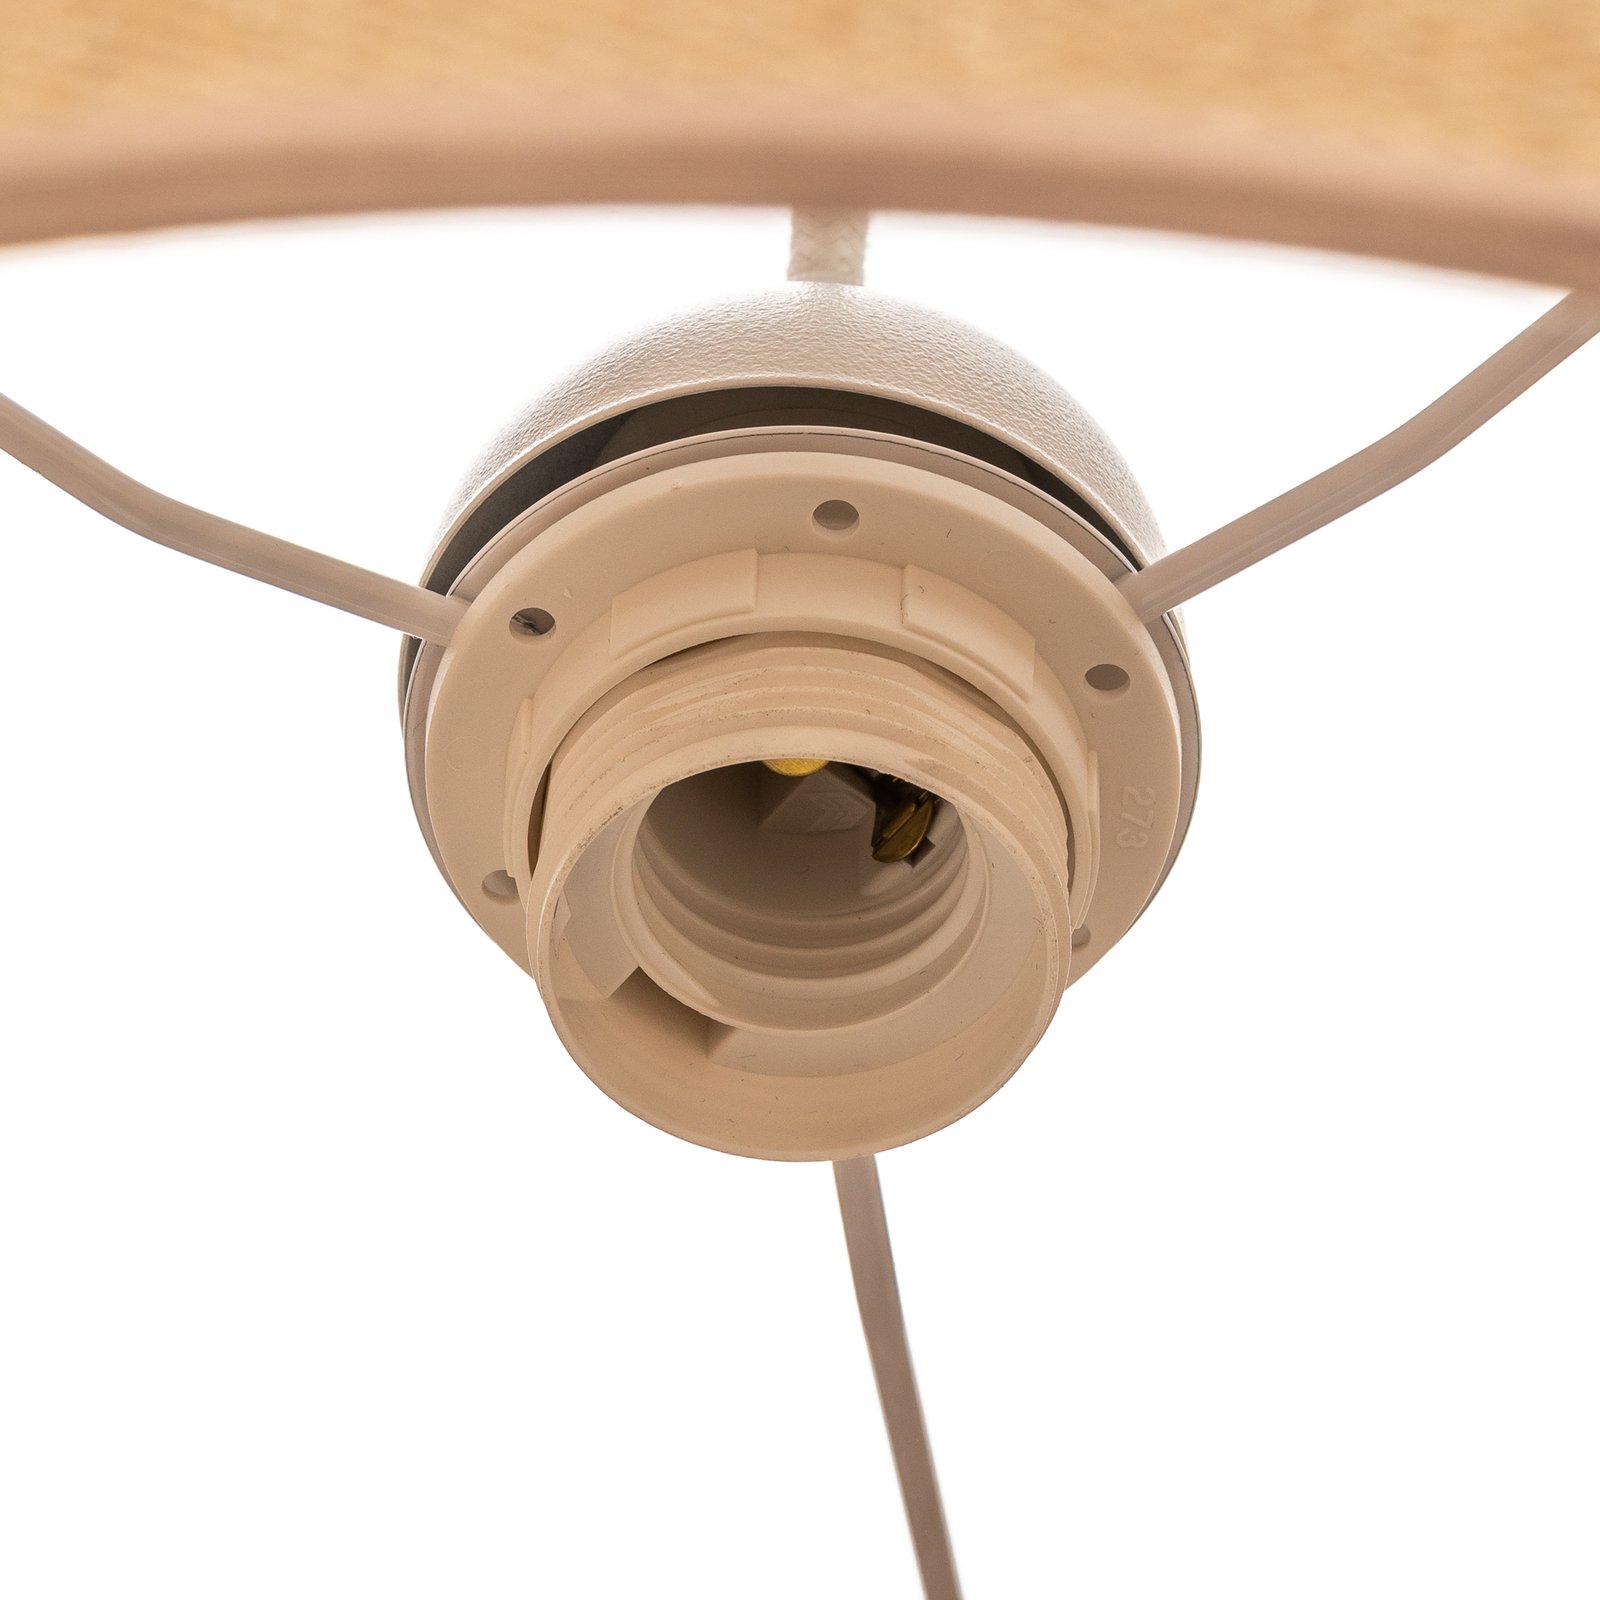 Jute hanging light, natural brown, Ø 40 cm 1-bulb